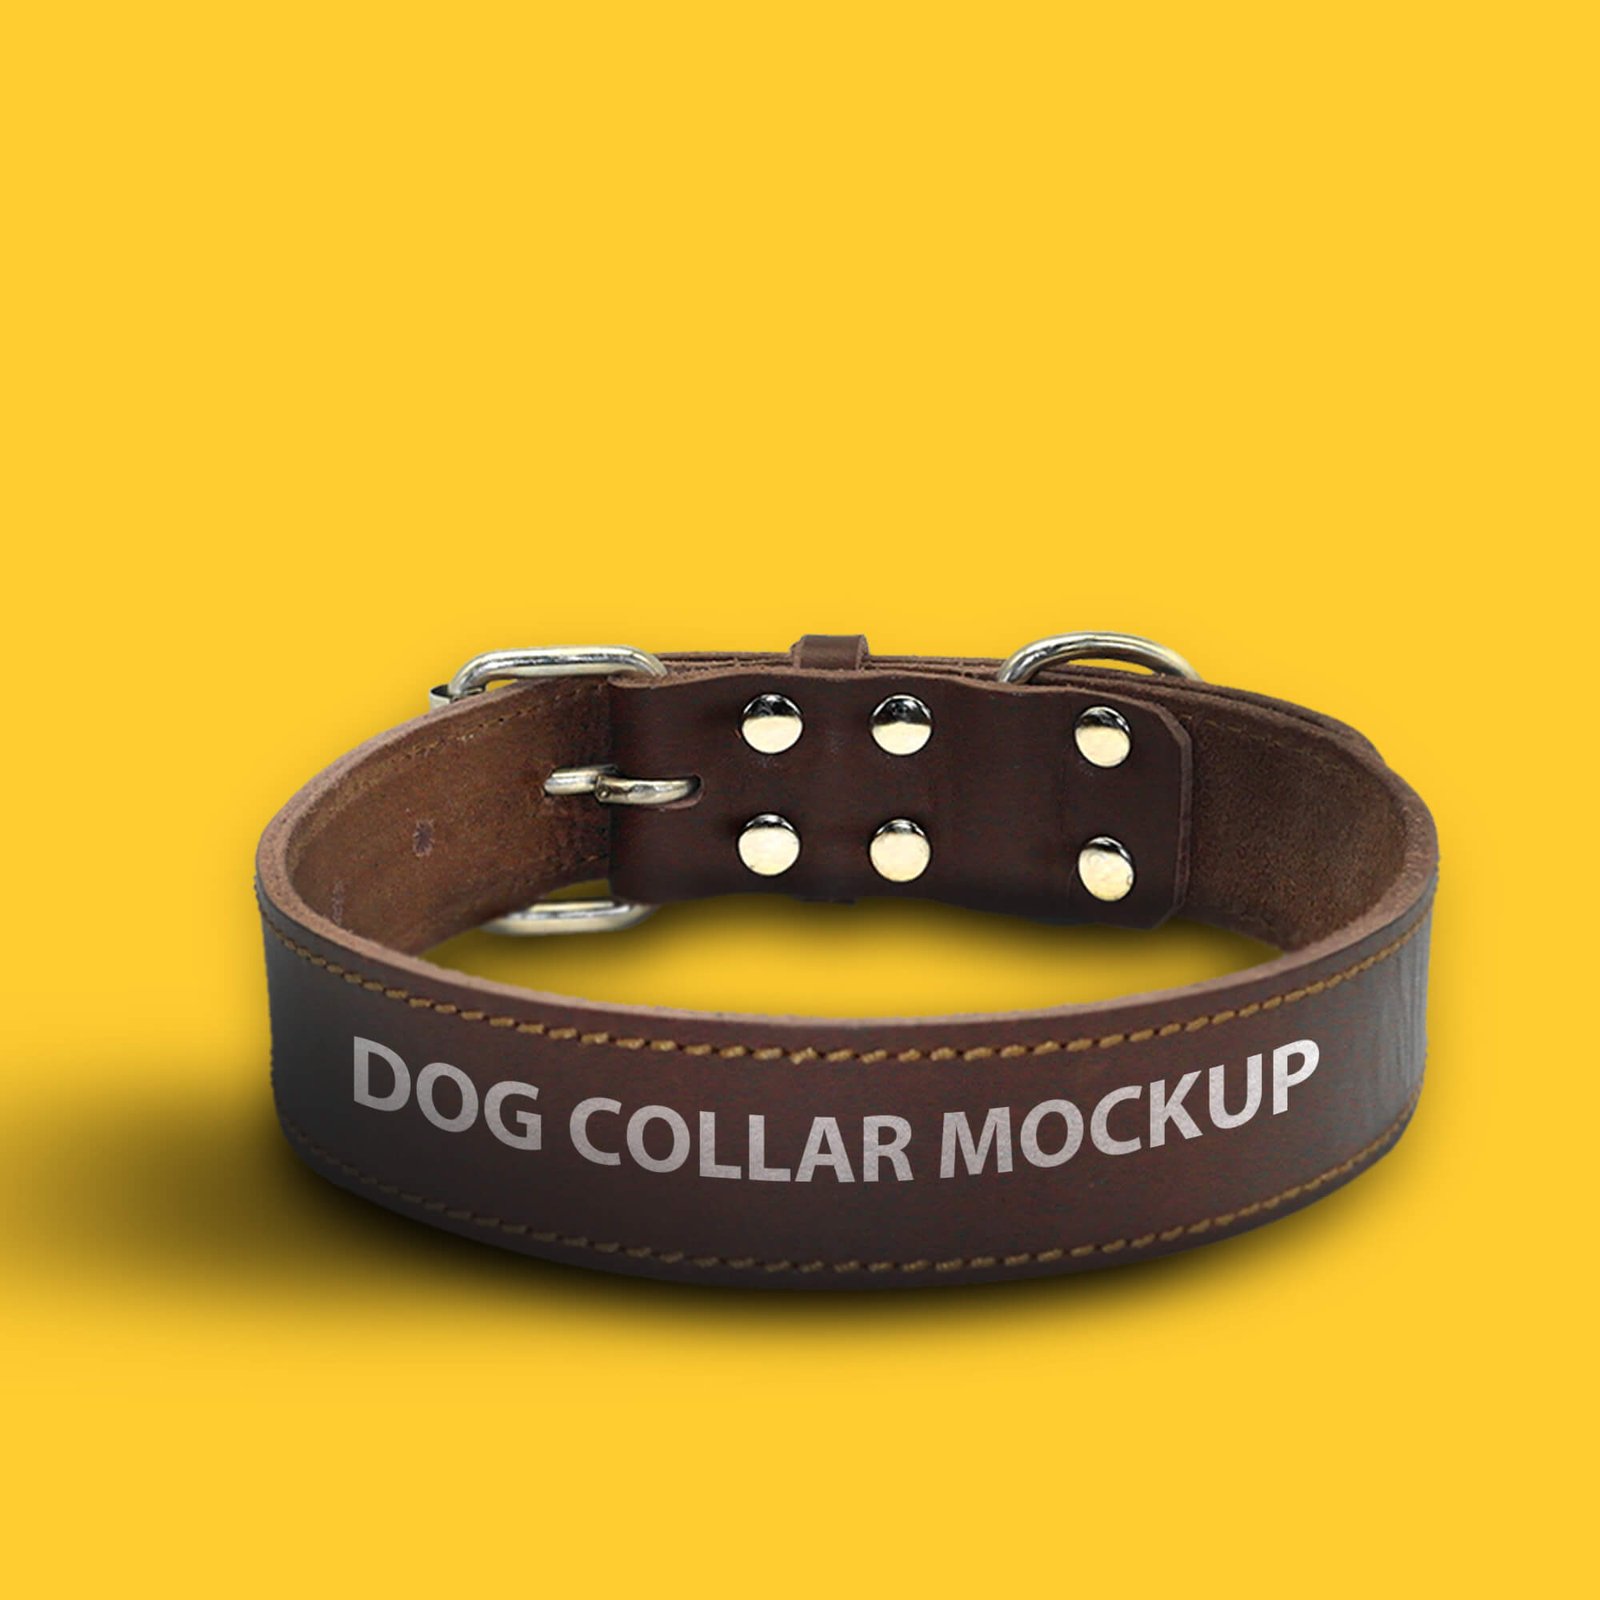 Design Free Dog Collar Mockup PSD Template